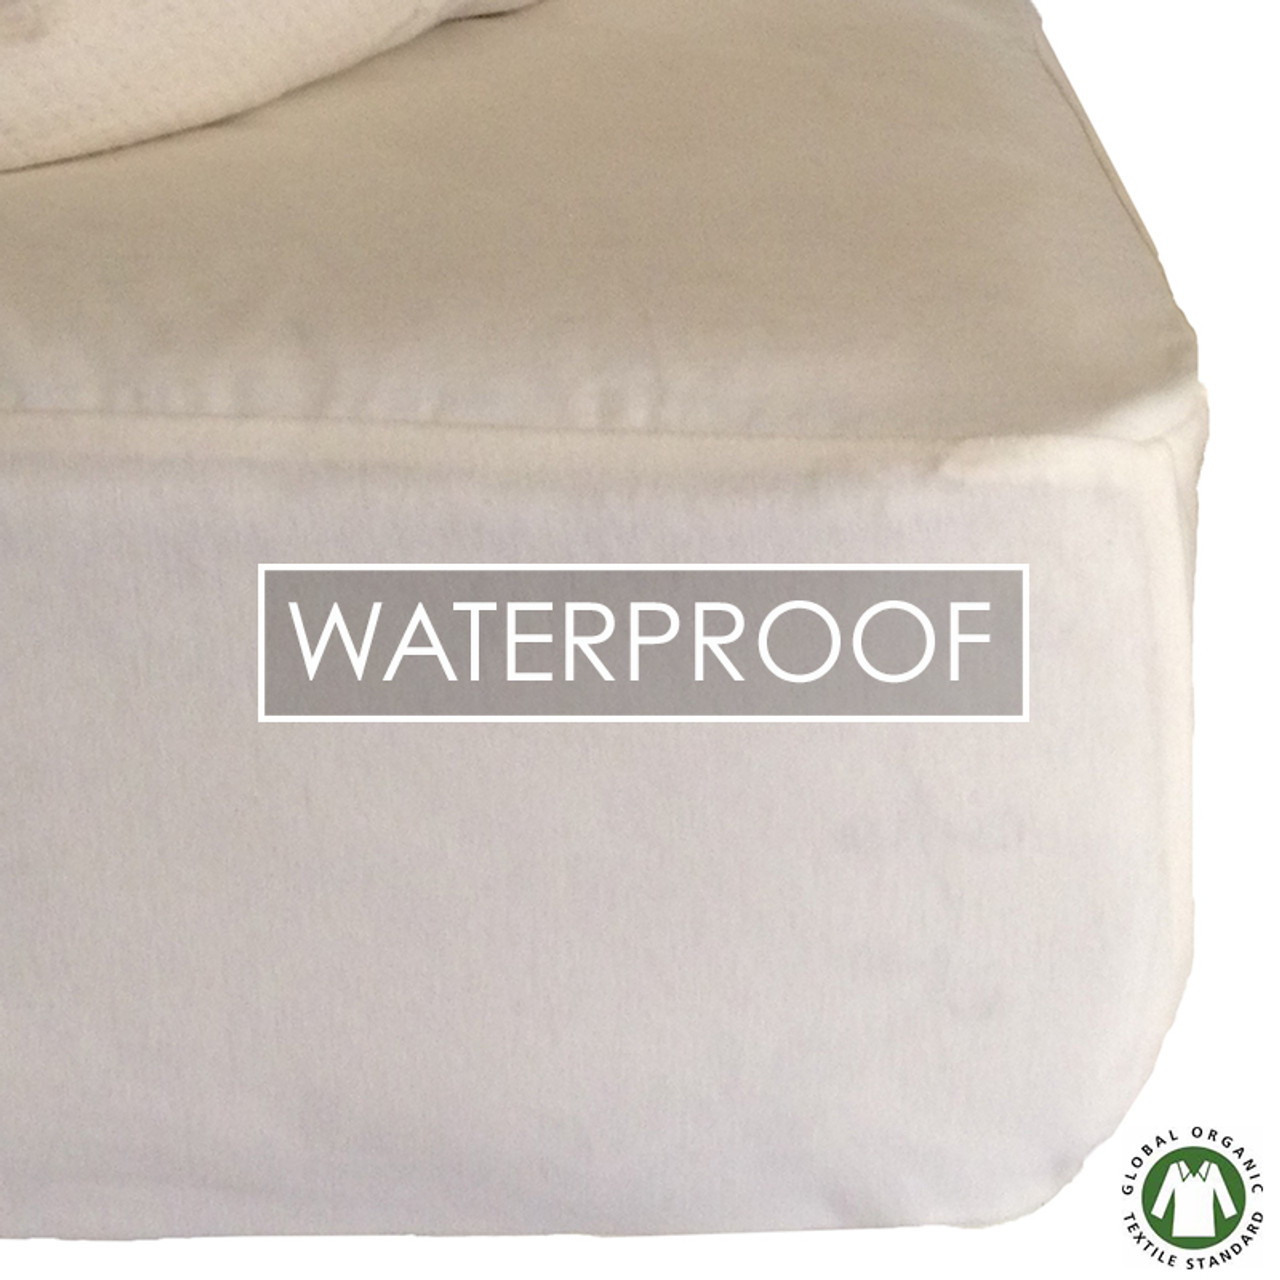 Organic Waterproof Mattress Protector Pads